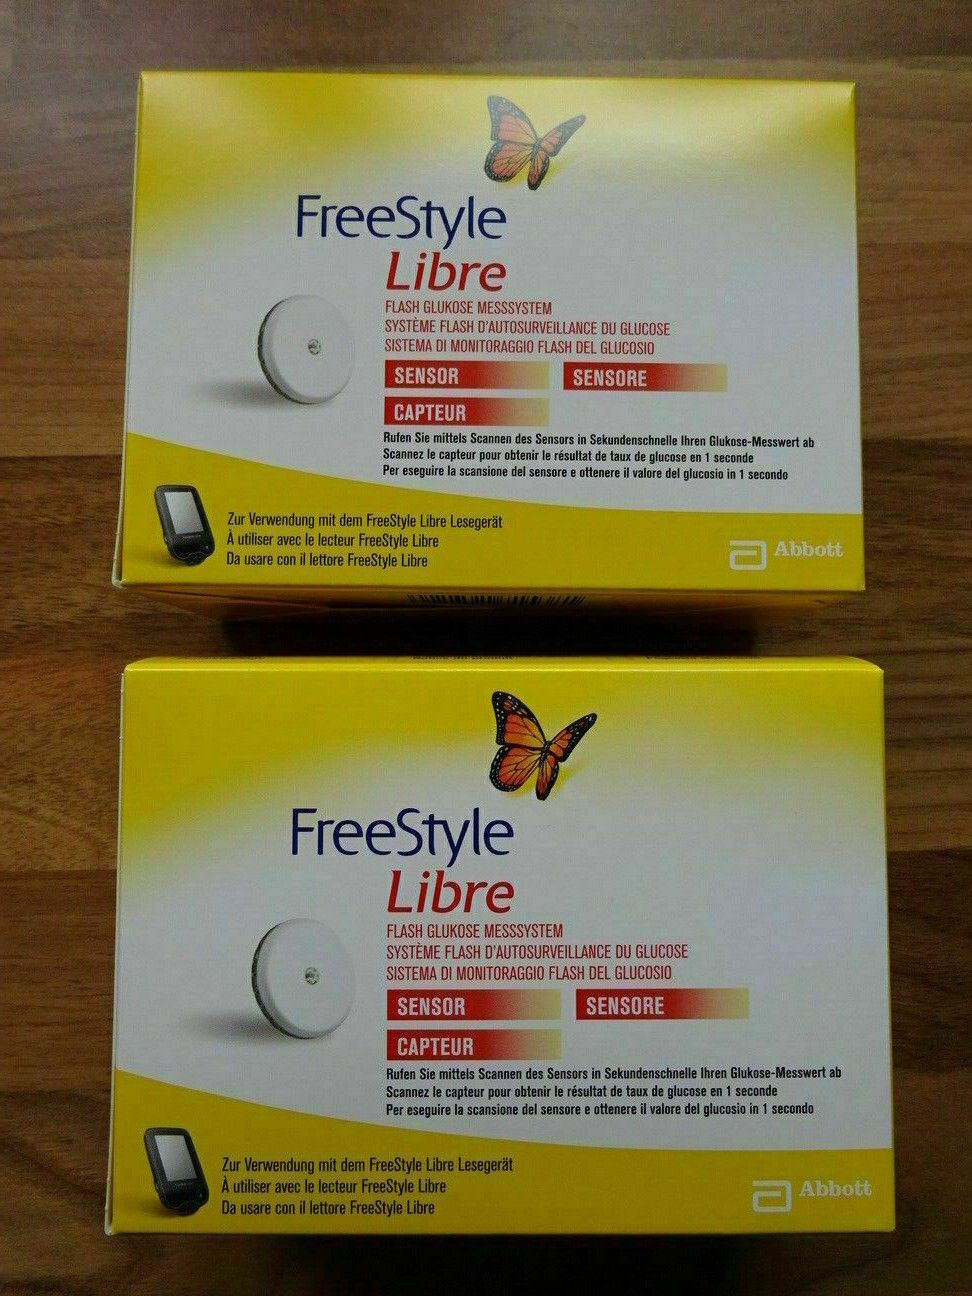 Freestyle Libre Sensors